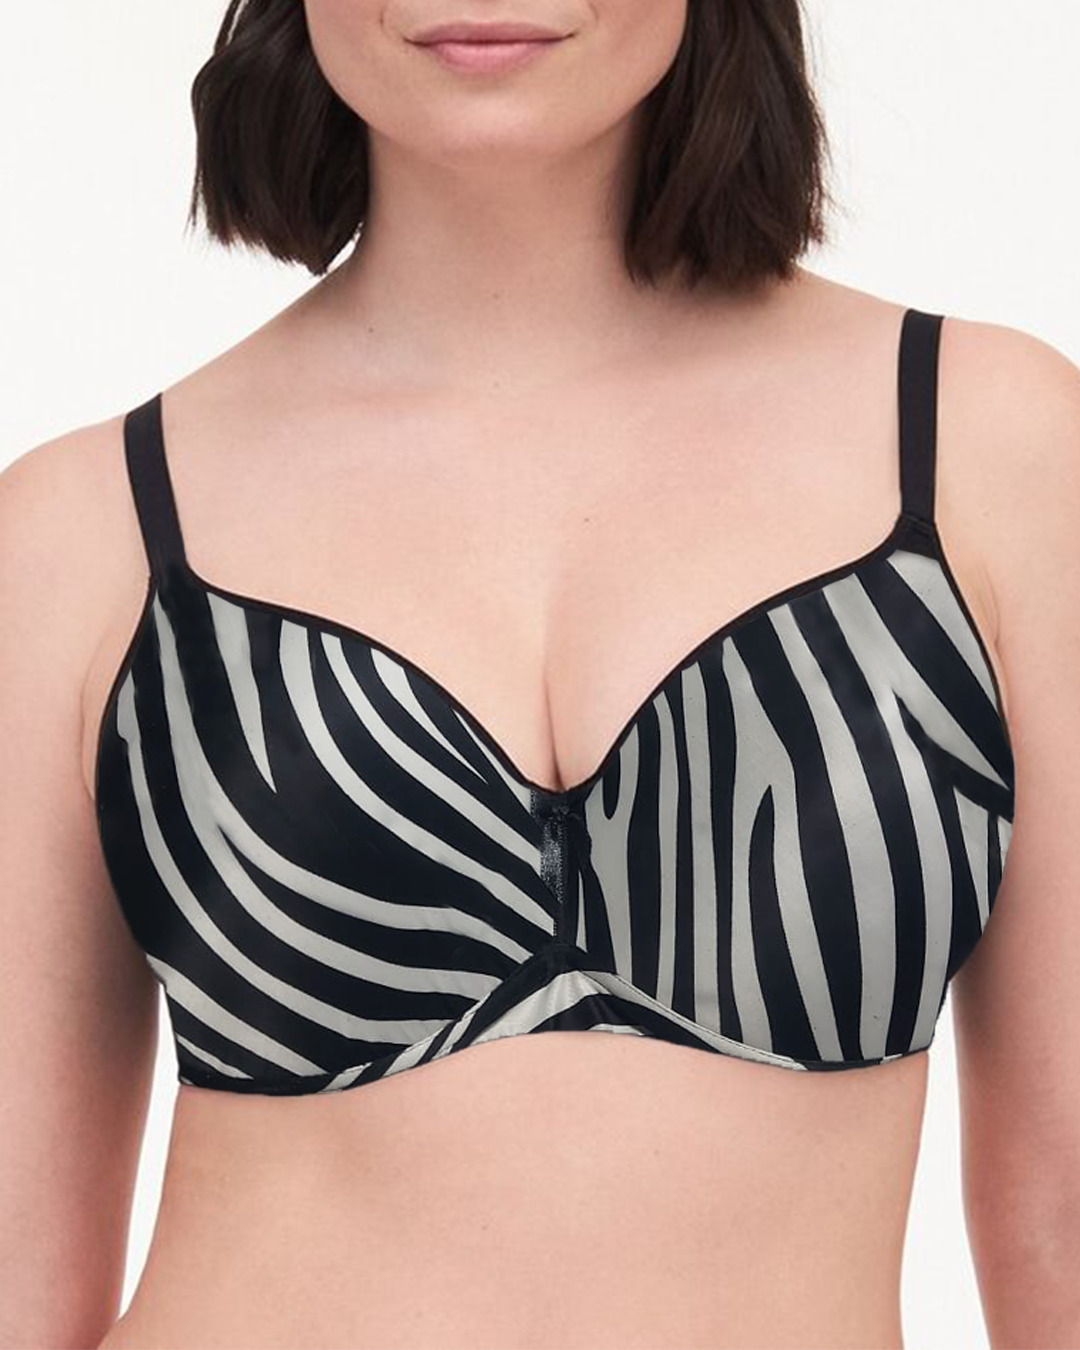 Women's plain zebra striped bra